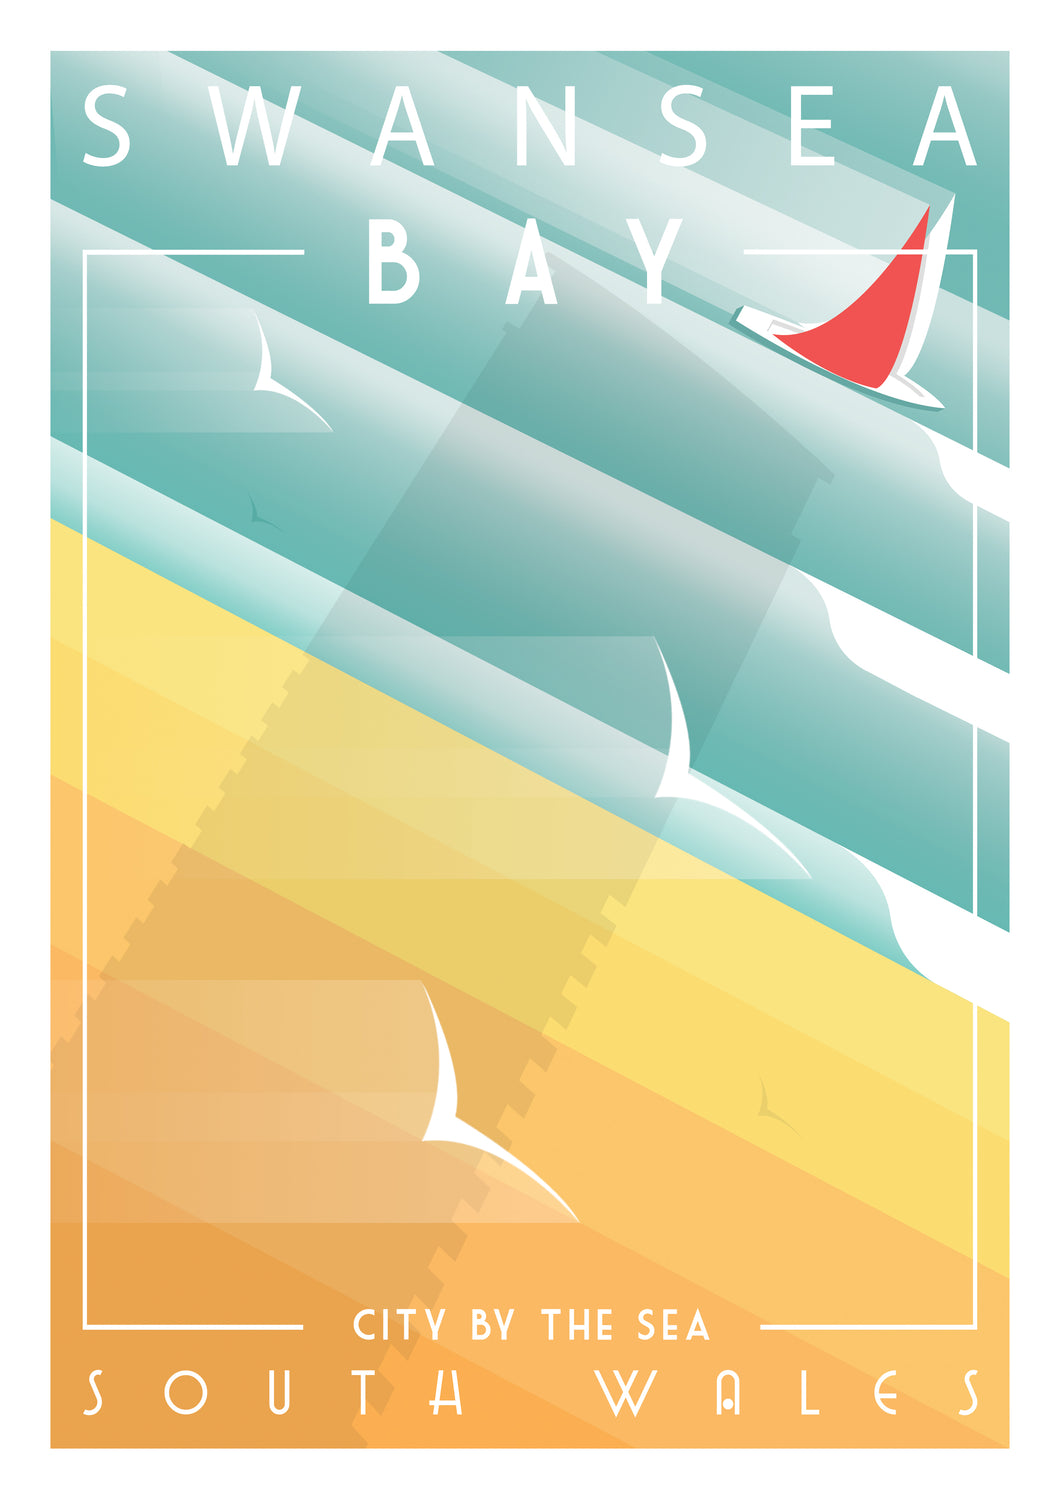 Swansea Bay (City by the sea) Modern & Minimalistic Print